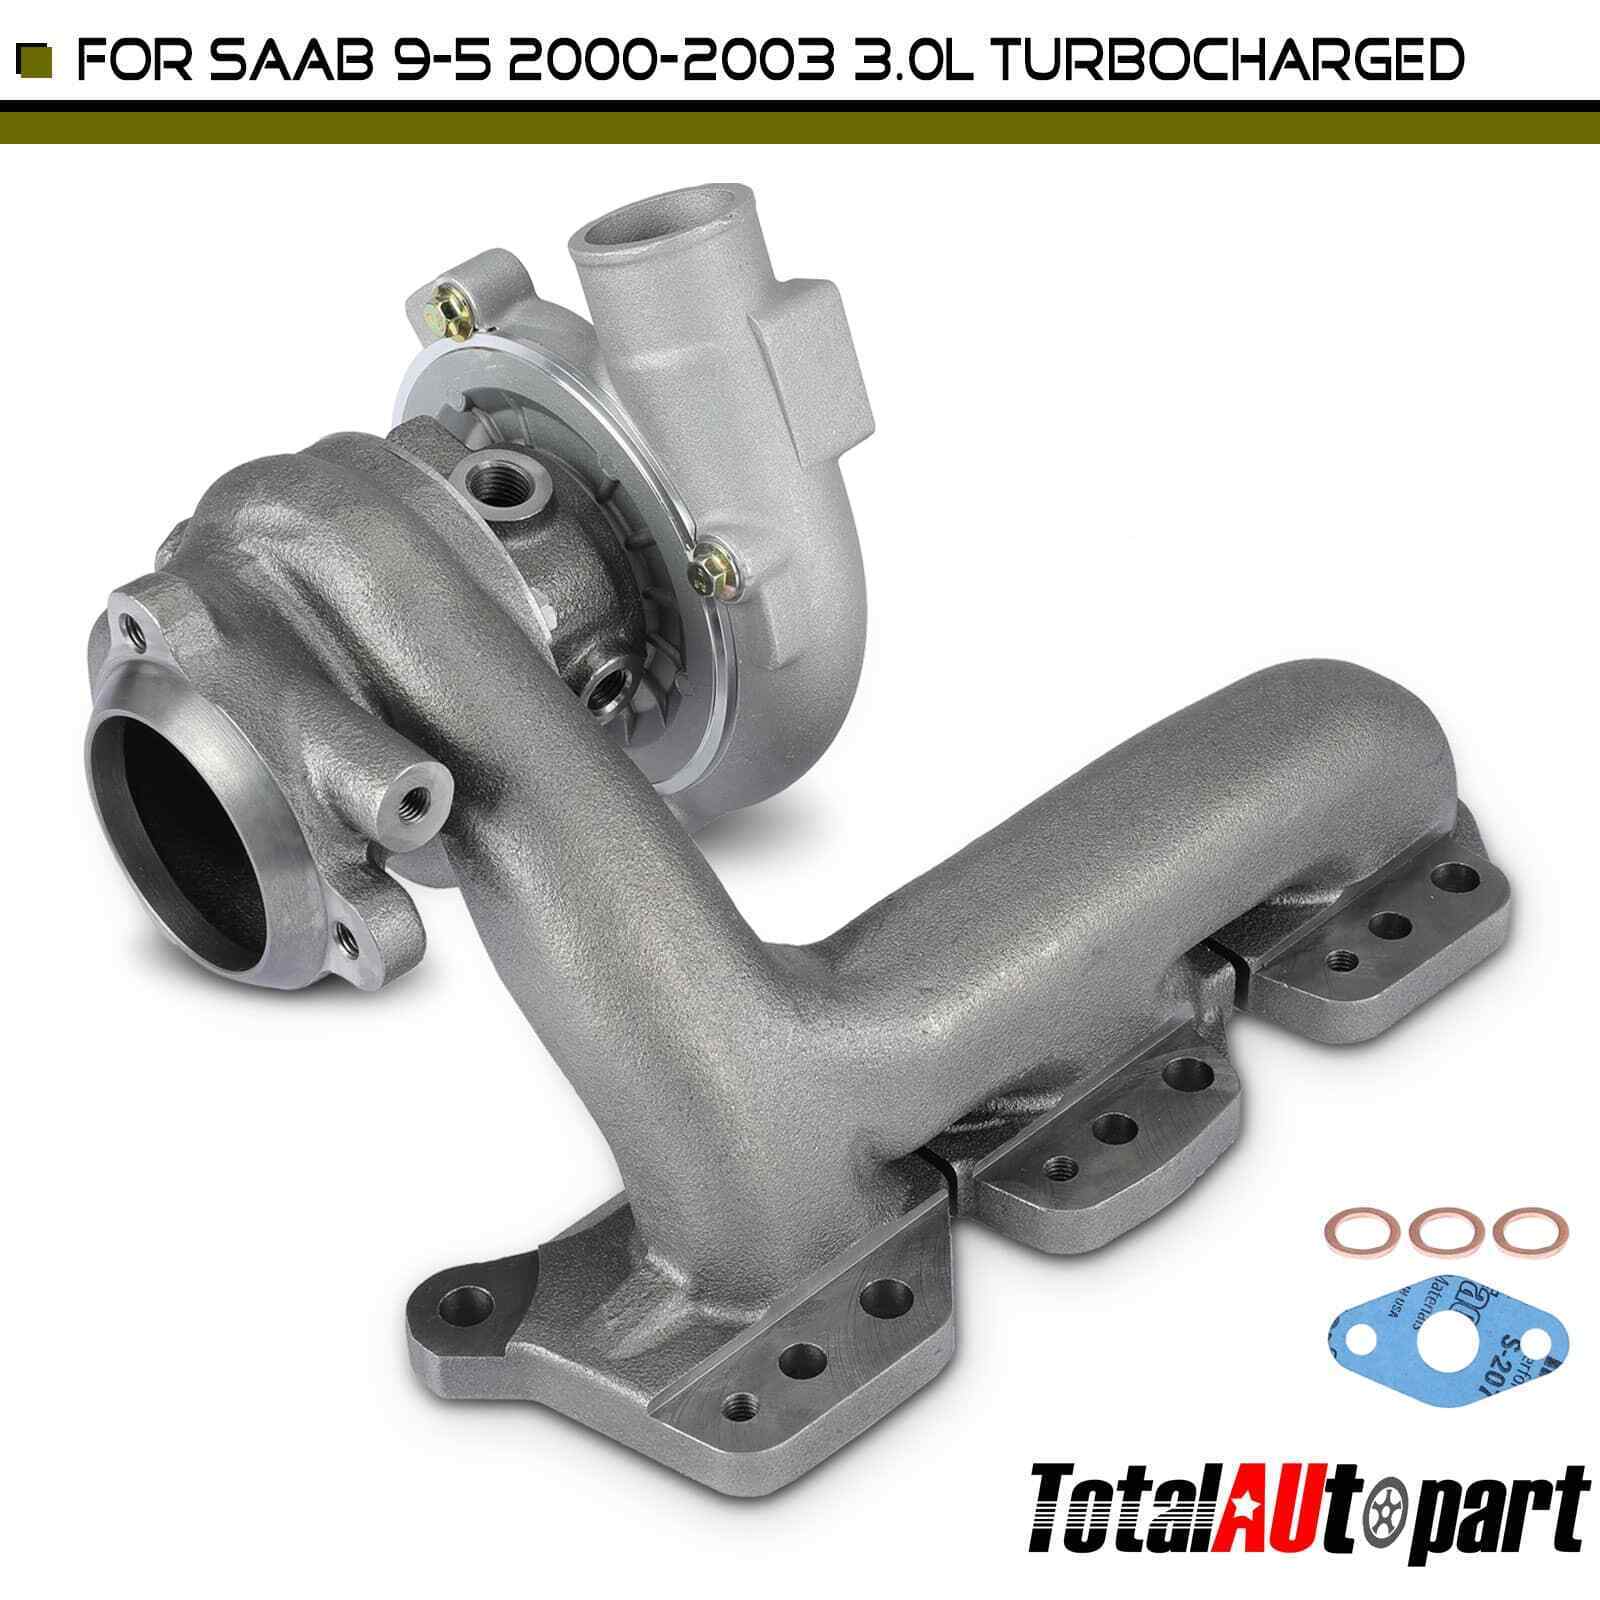 GT1549M Turbo Turbocharger for Saab 9-5 2000 2001 2002 2003 V6 3.0L 708699-0002